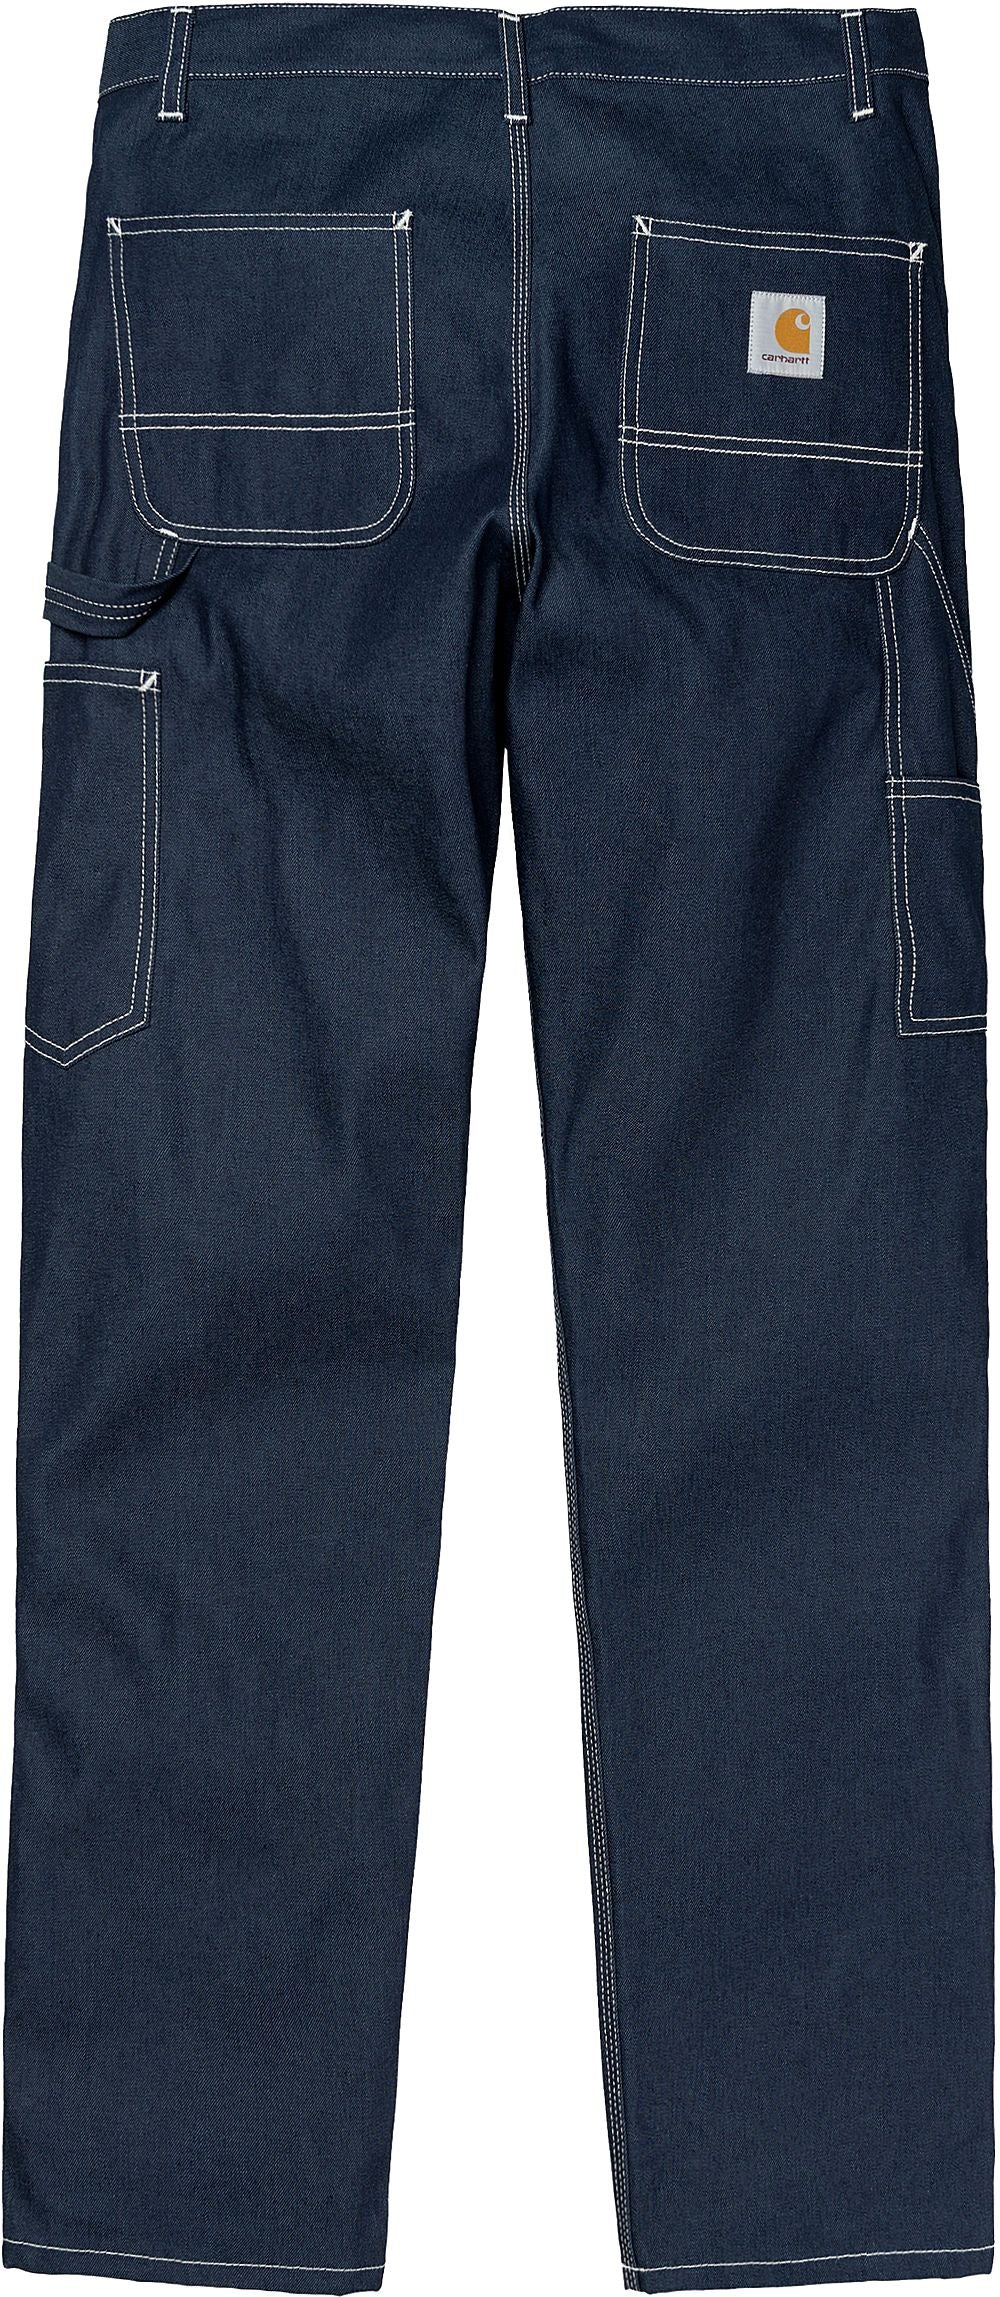  Carhartt Wip Jeans Ruck Single Knee Pant Blue Rigid Uomo - 1